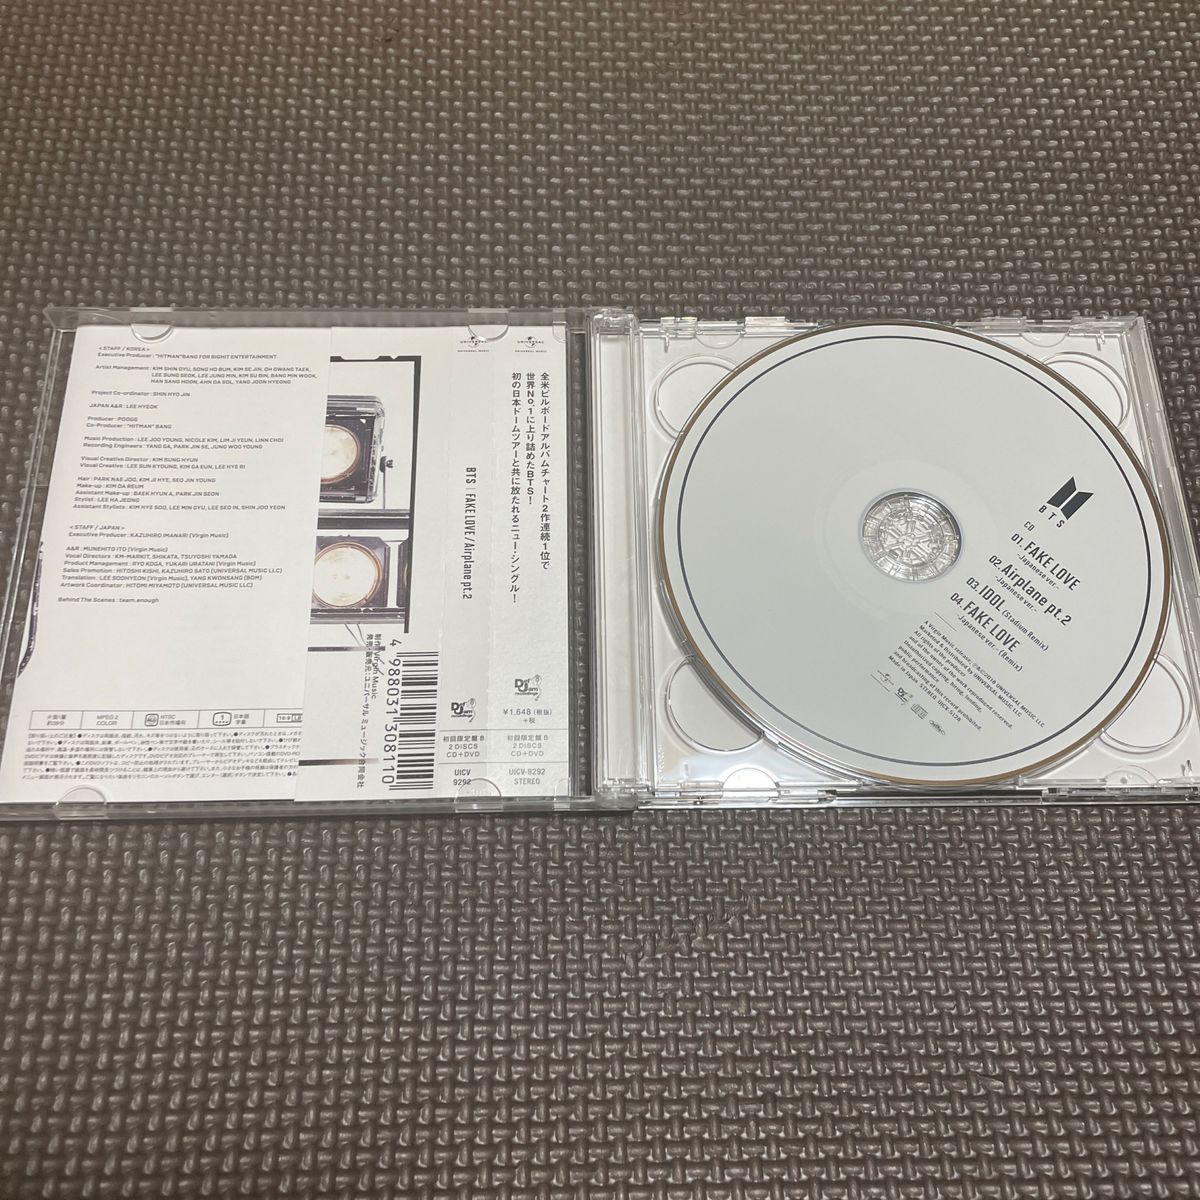 FAKE LOVE/Airplane pt.2 (初回限定盤B) (DVD付) CD BTS (防弾少年団)